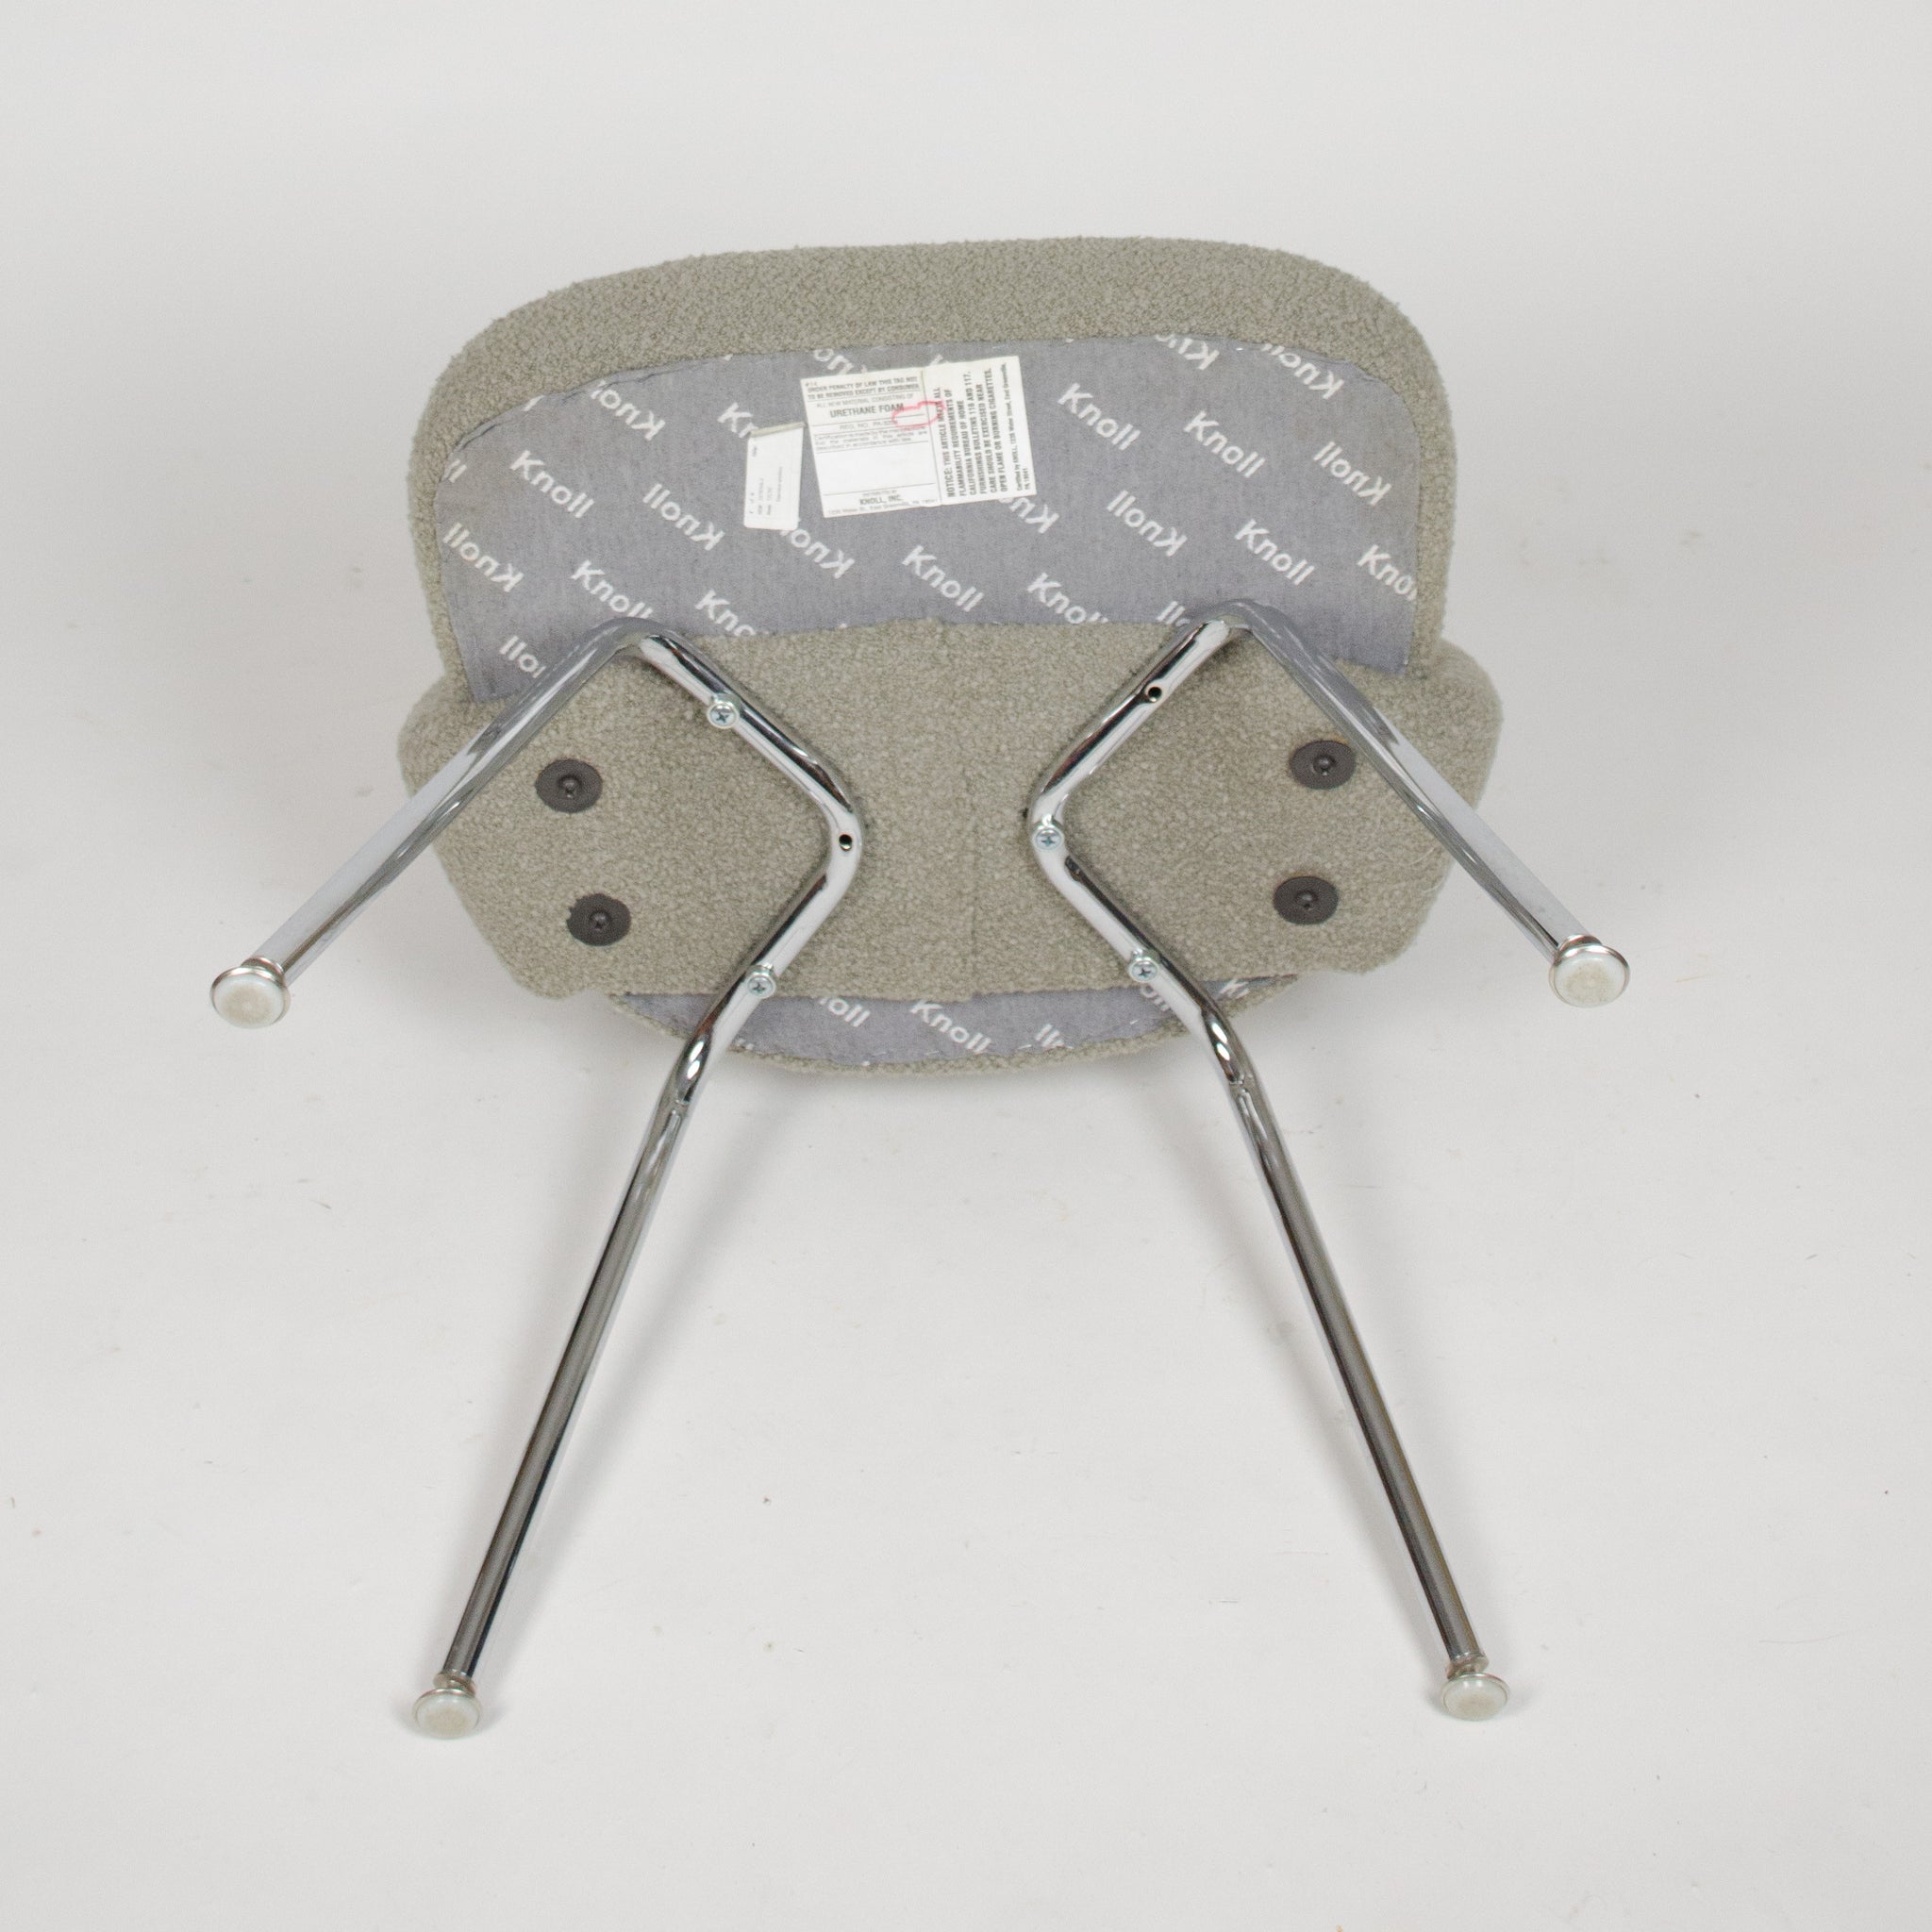 SOLD Knoll International Eero Saarinen Armless Executive Side Chair Metal Legs 2x